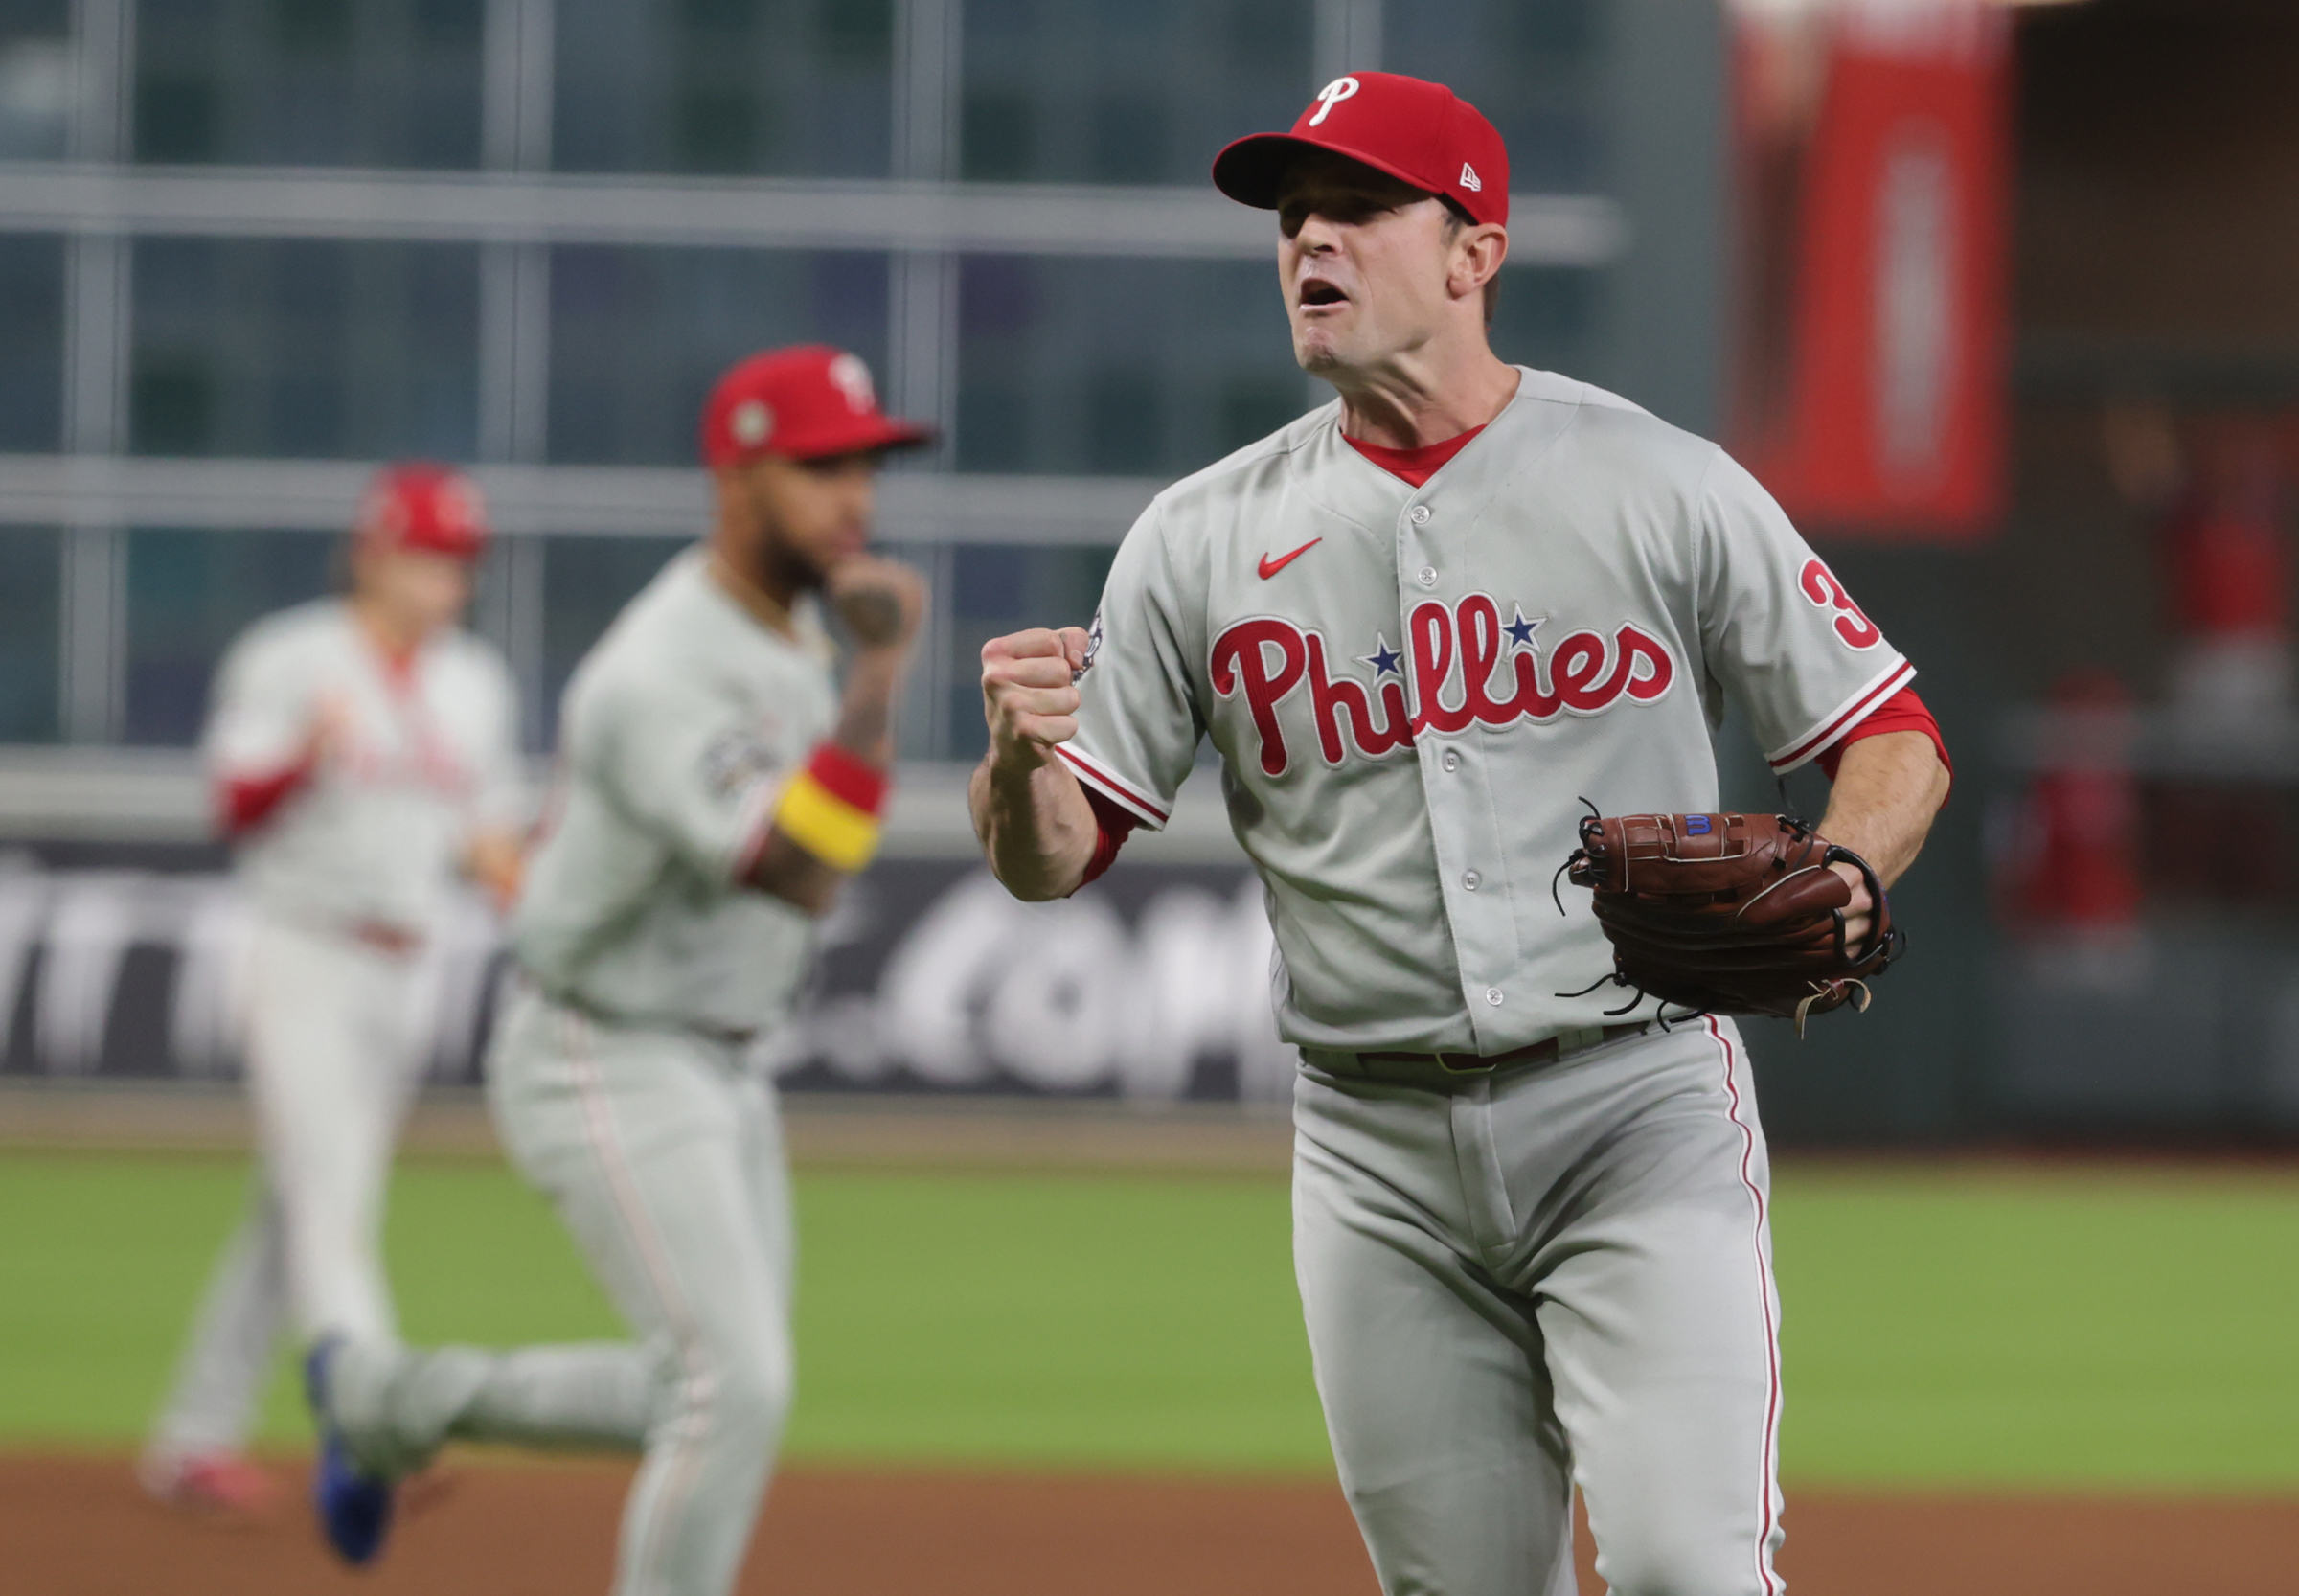 Ranger Suarez Rookie 2019 Topps #303 Philadelphia Phillies